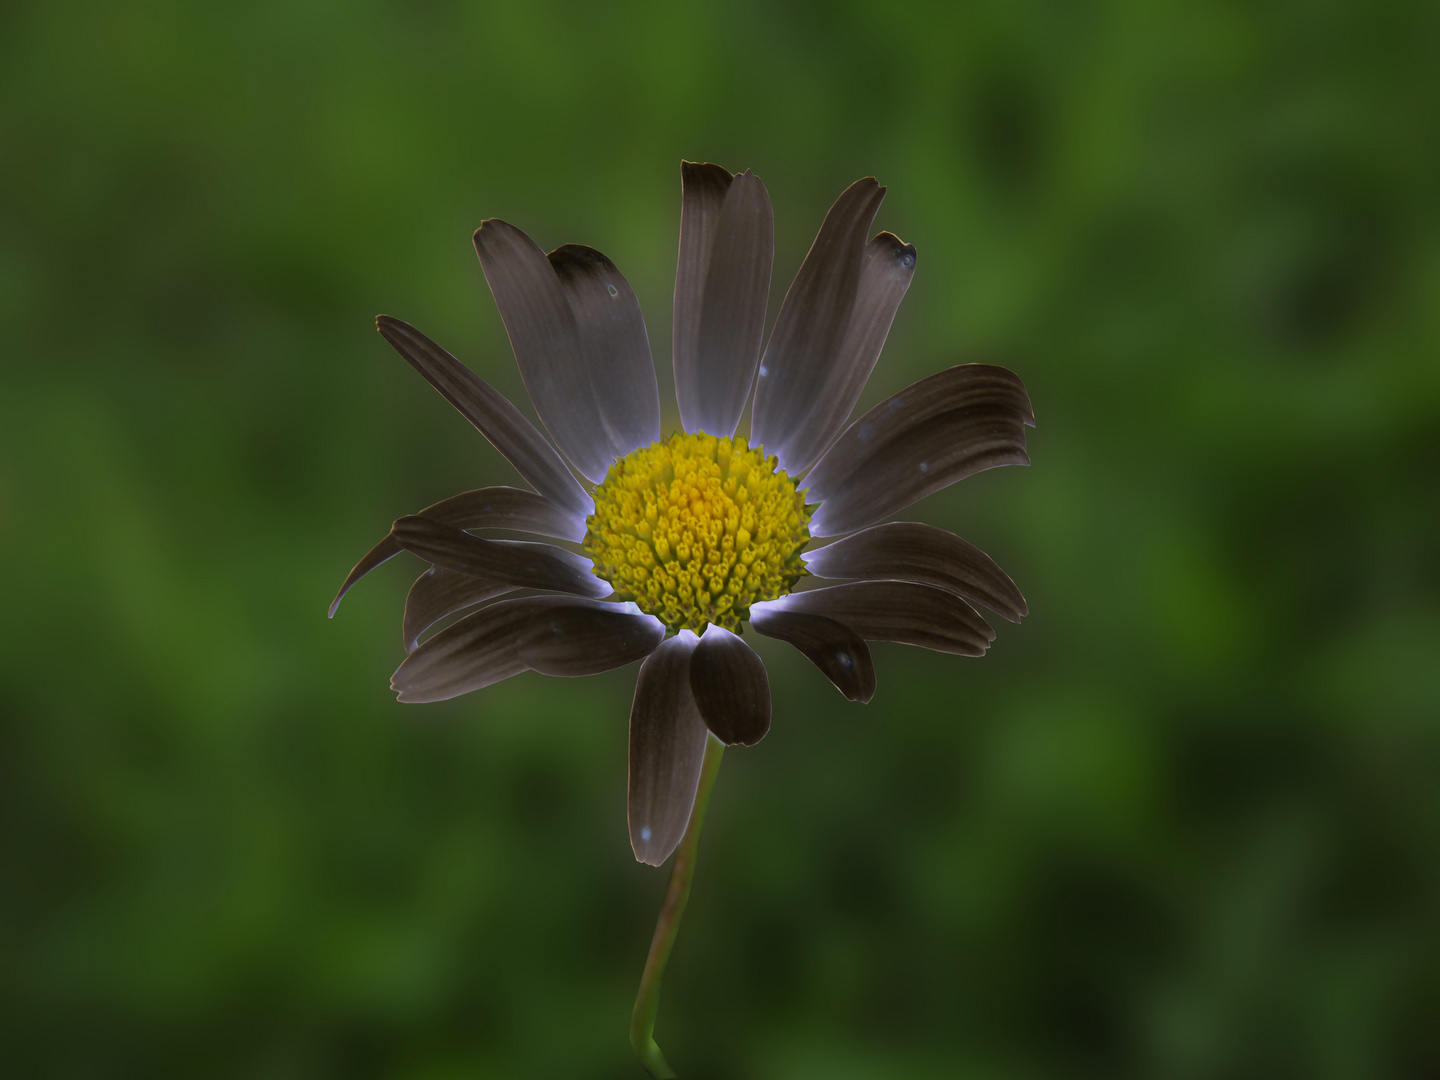 Black Daisy / Schwarzes Gänseblümchen